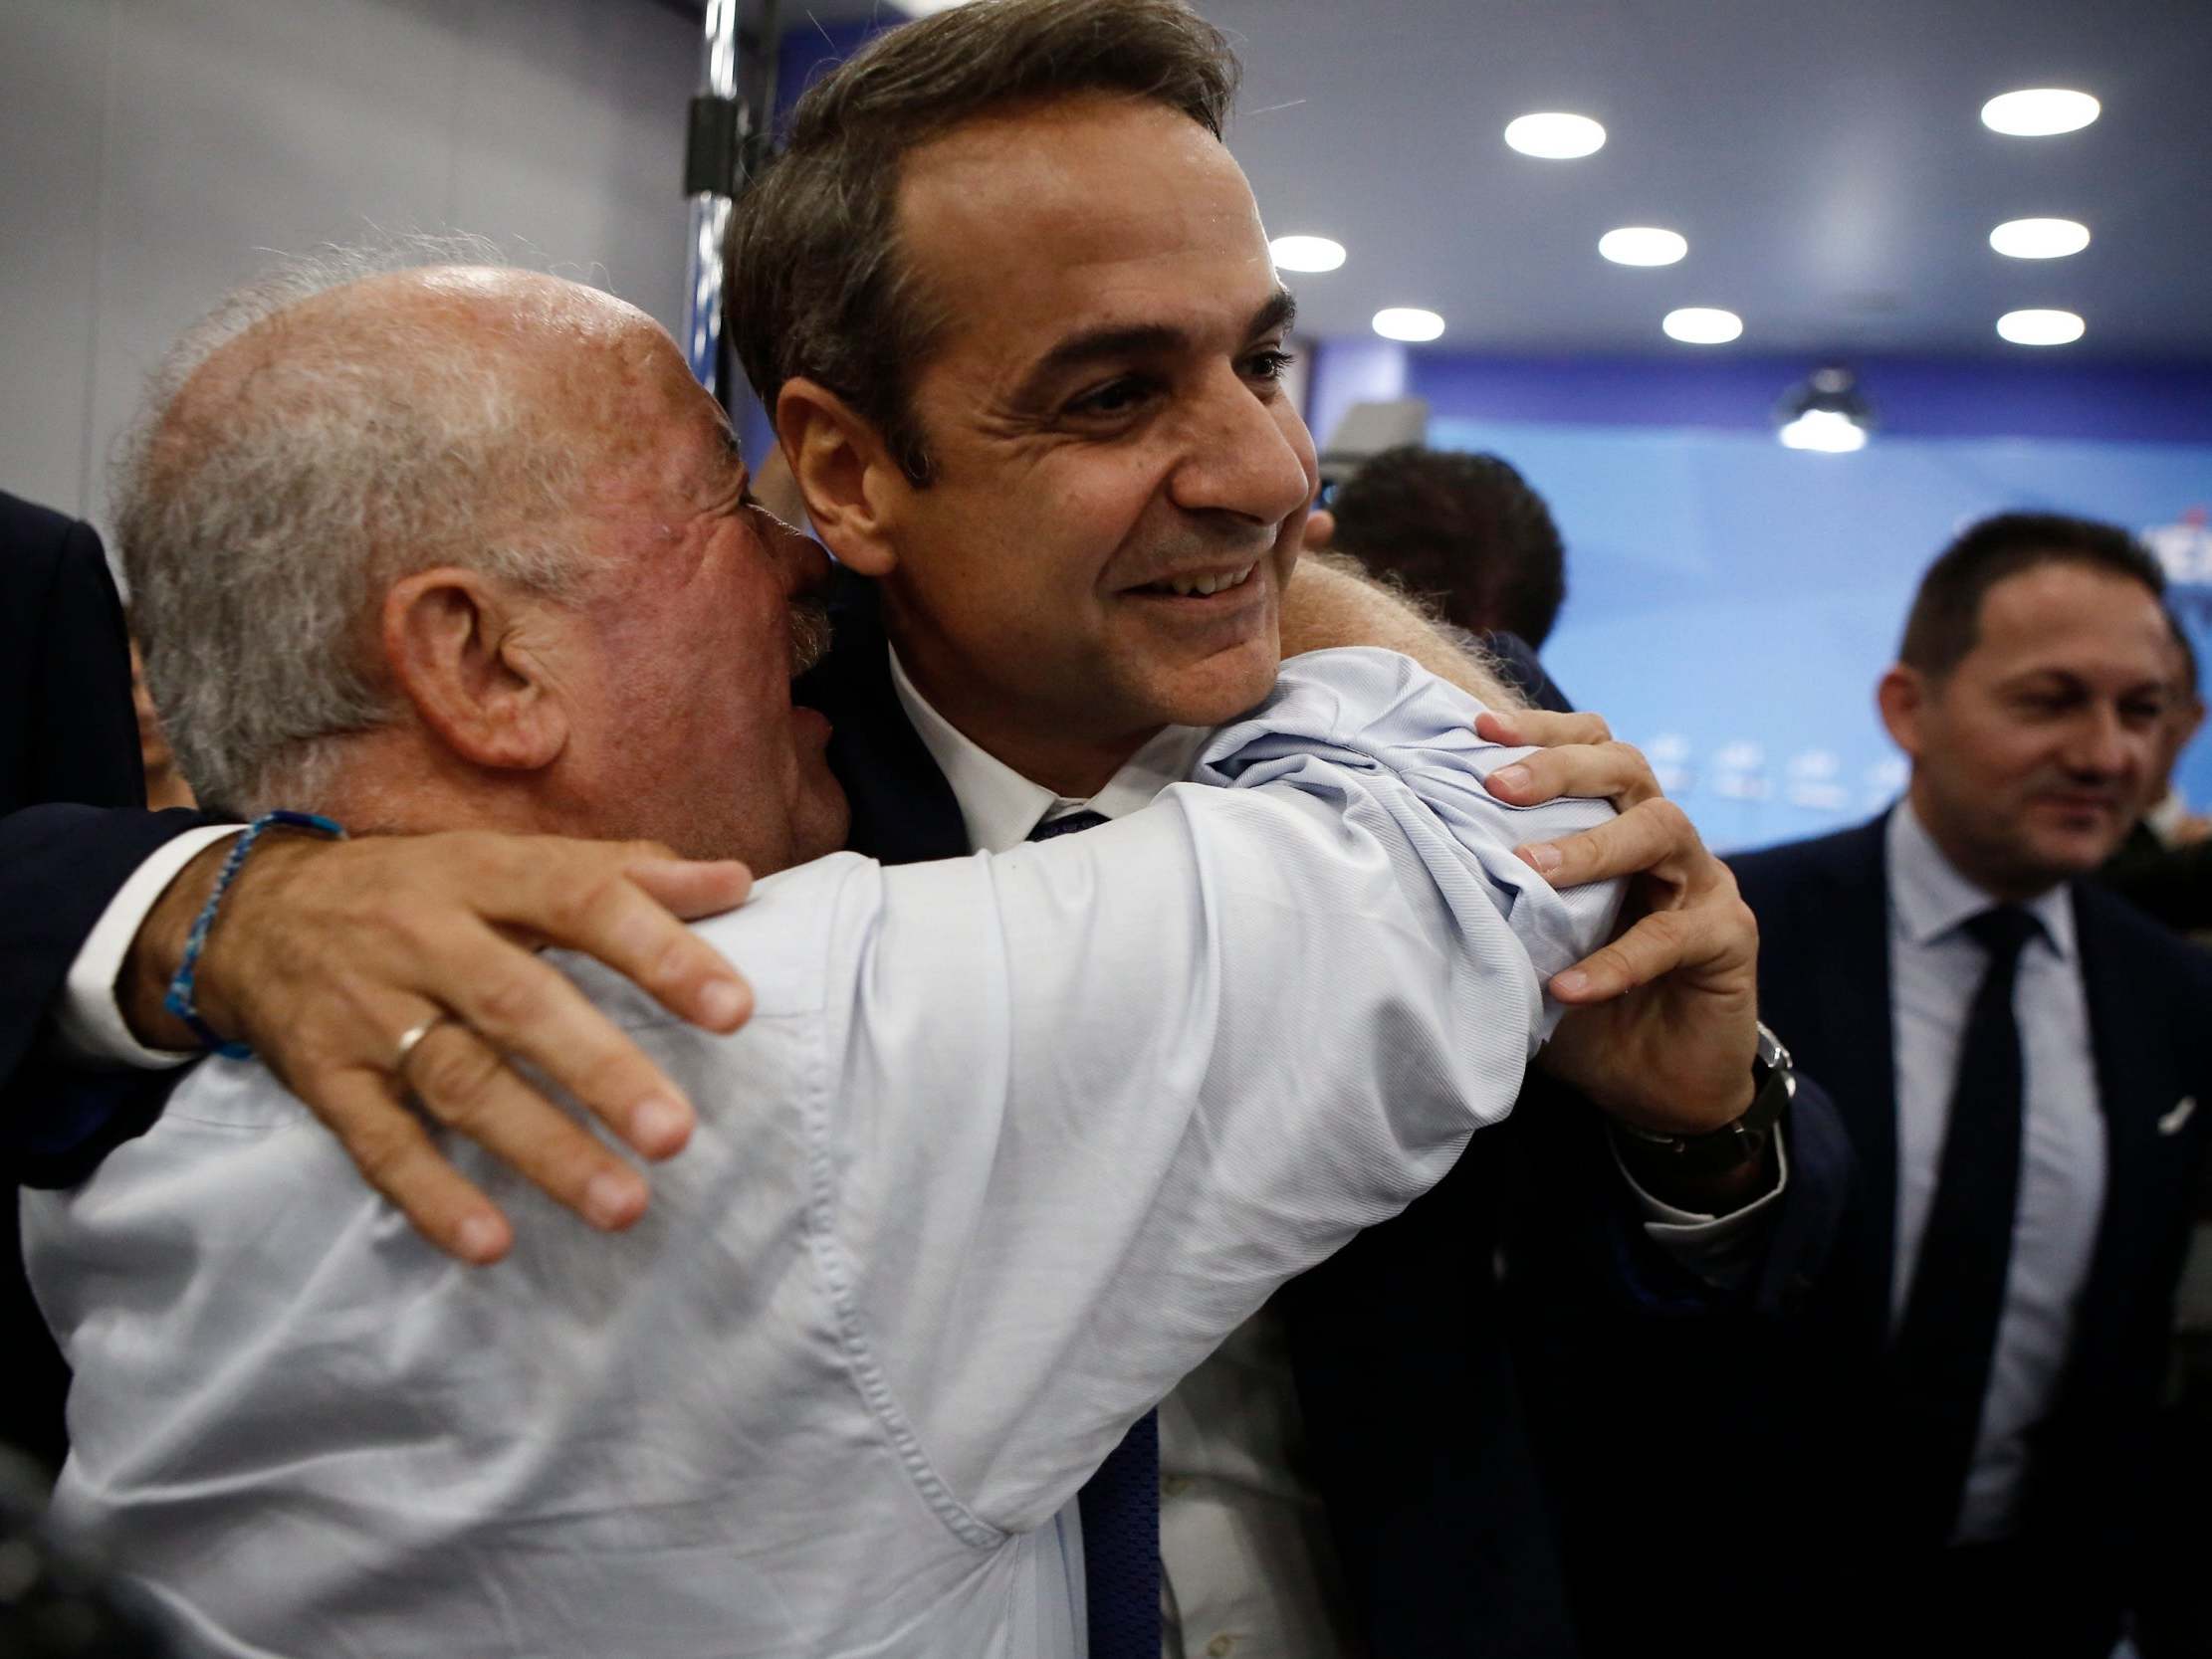 New Democracy leader Kyriakos Mitsotakis hugs supporters following election win